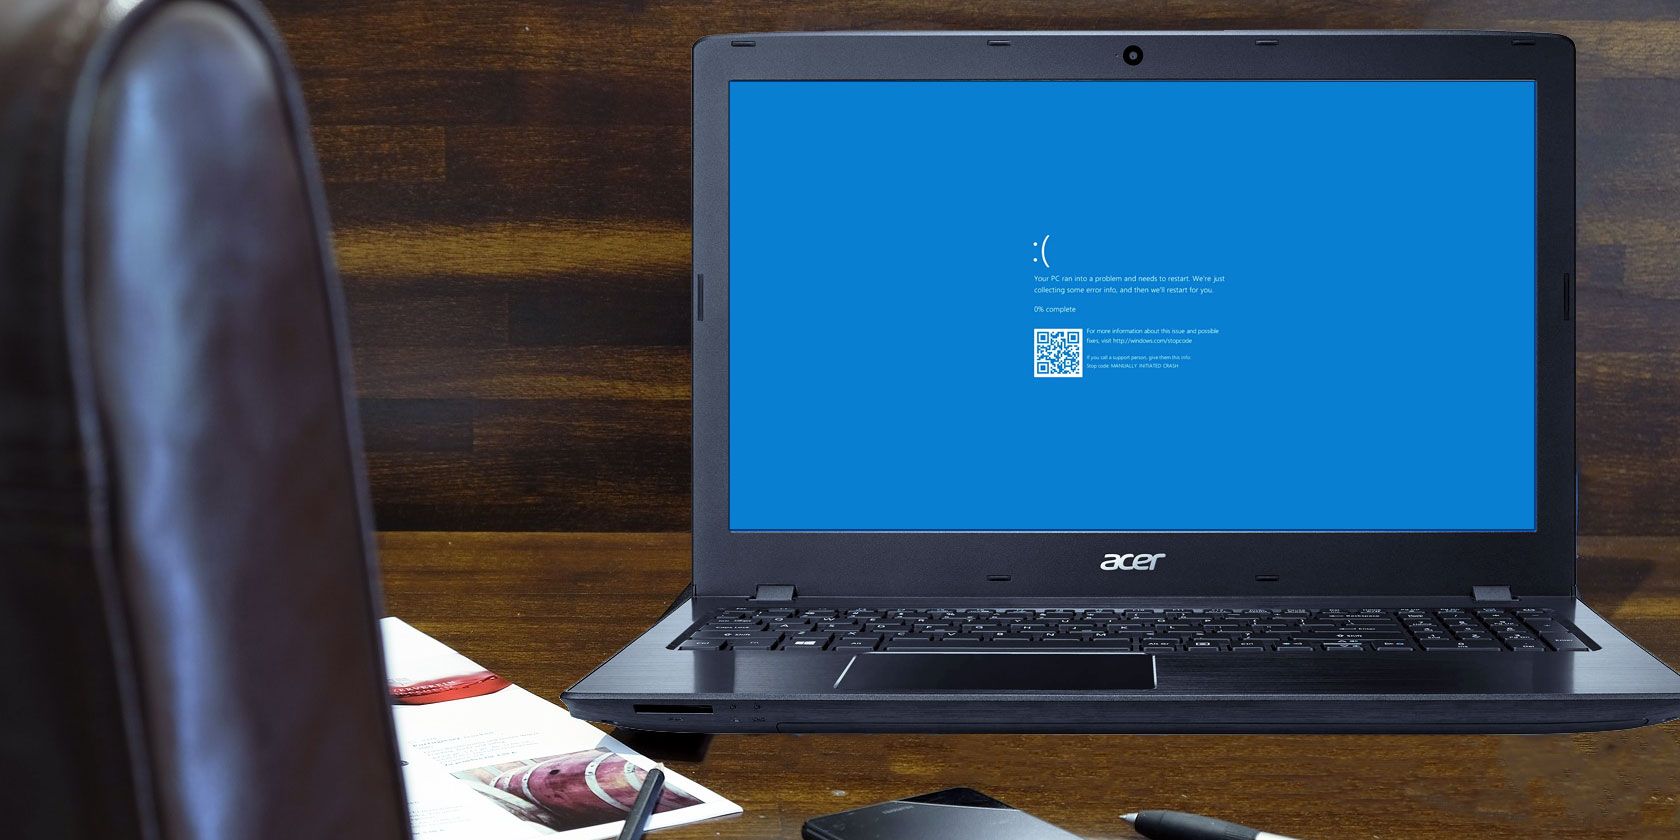 Windows 10 blue screen of death on a laptop sitting on a desk